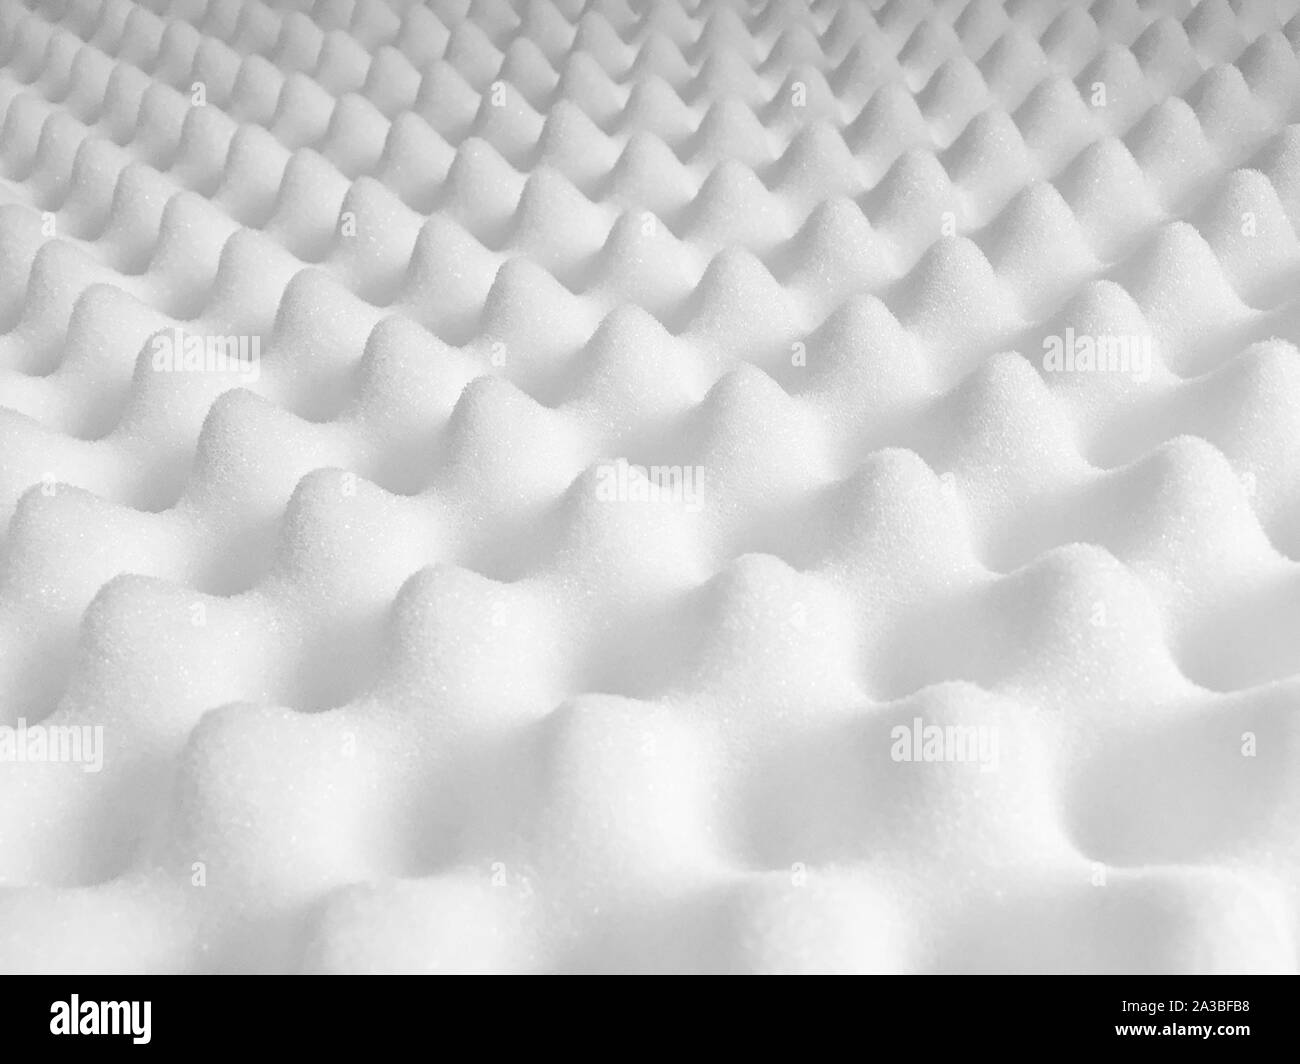 Memory foam mattress details Stock Photo